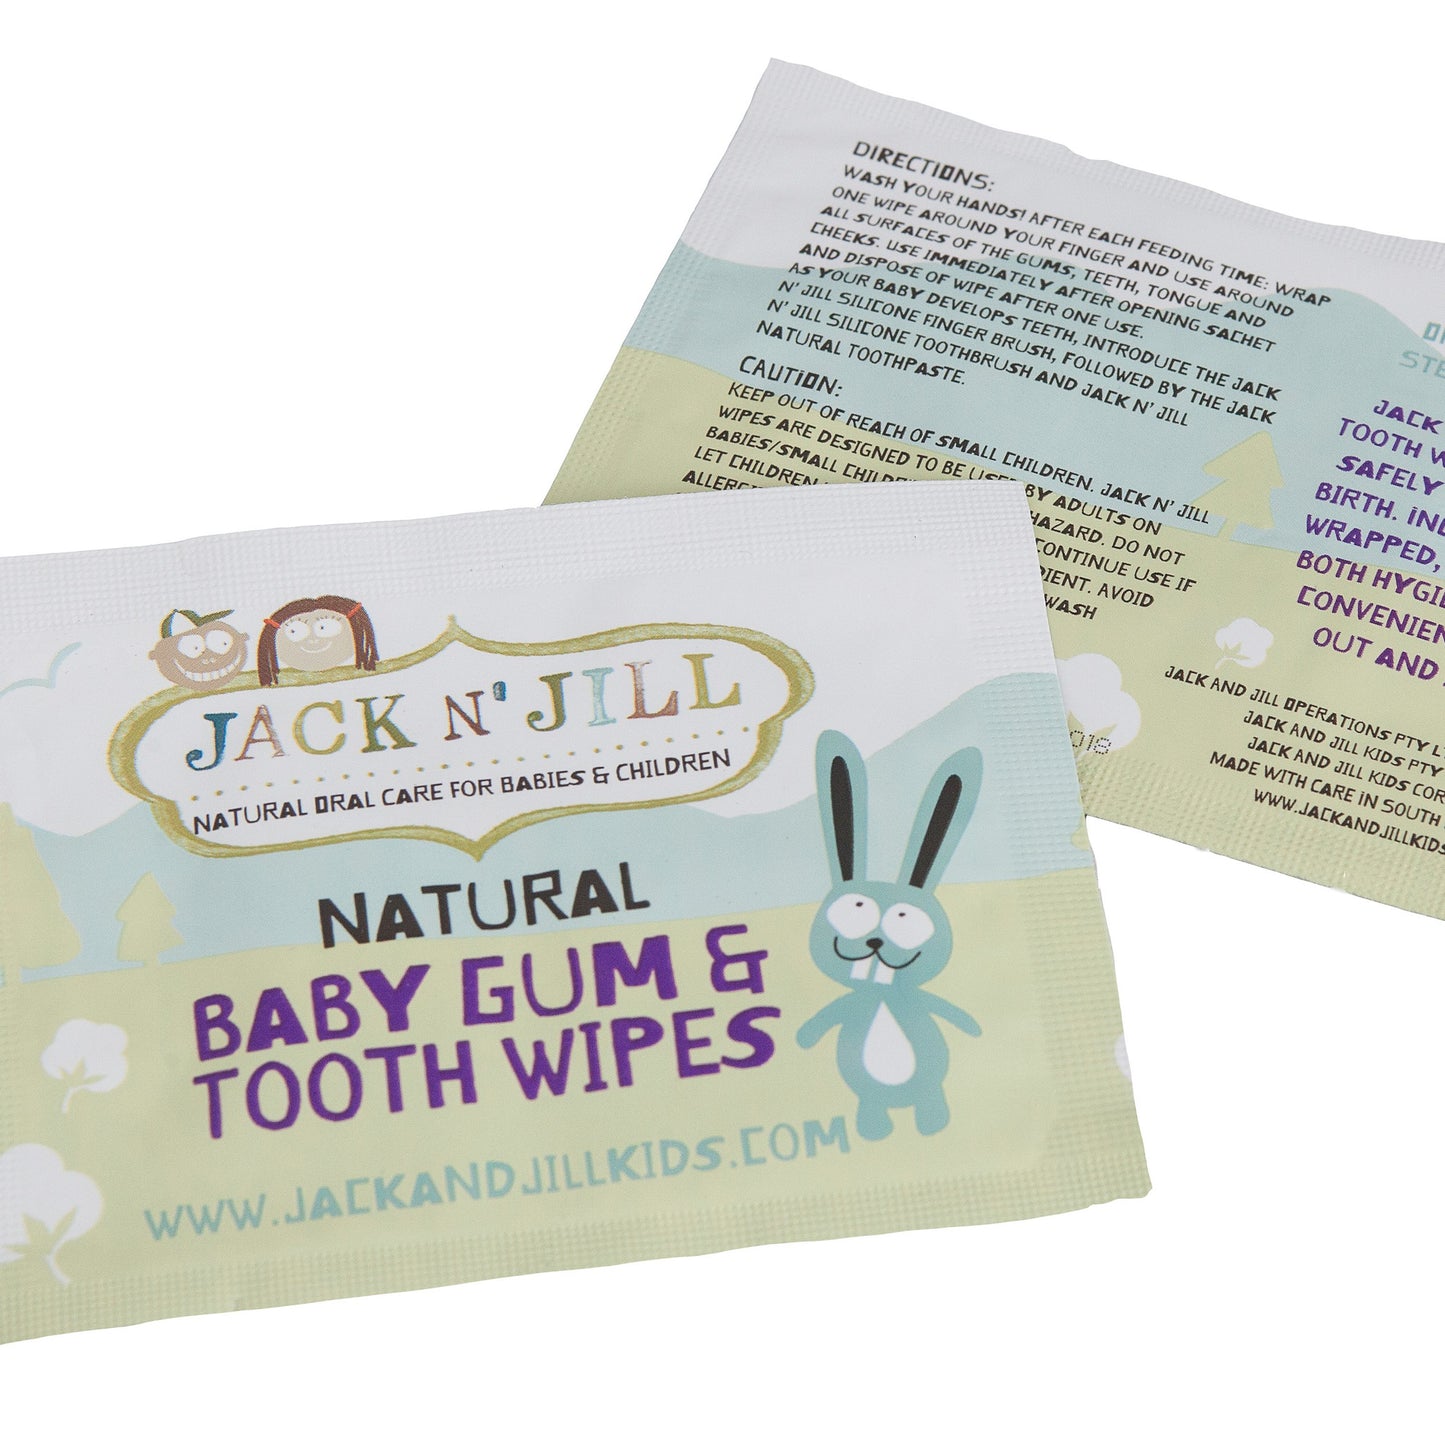 Jack n Jill Natural Baby Gum & Tooth Wipes - 25 Pack